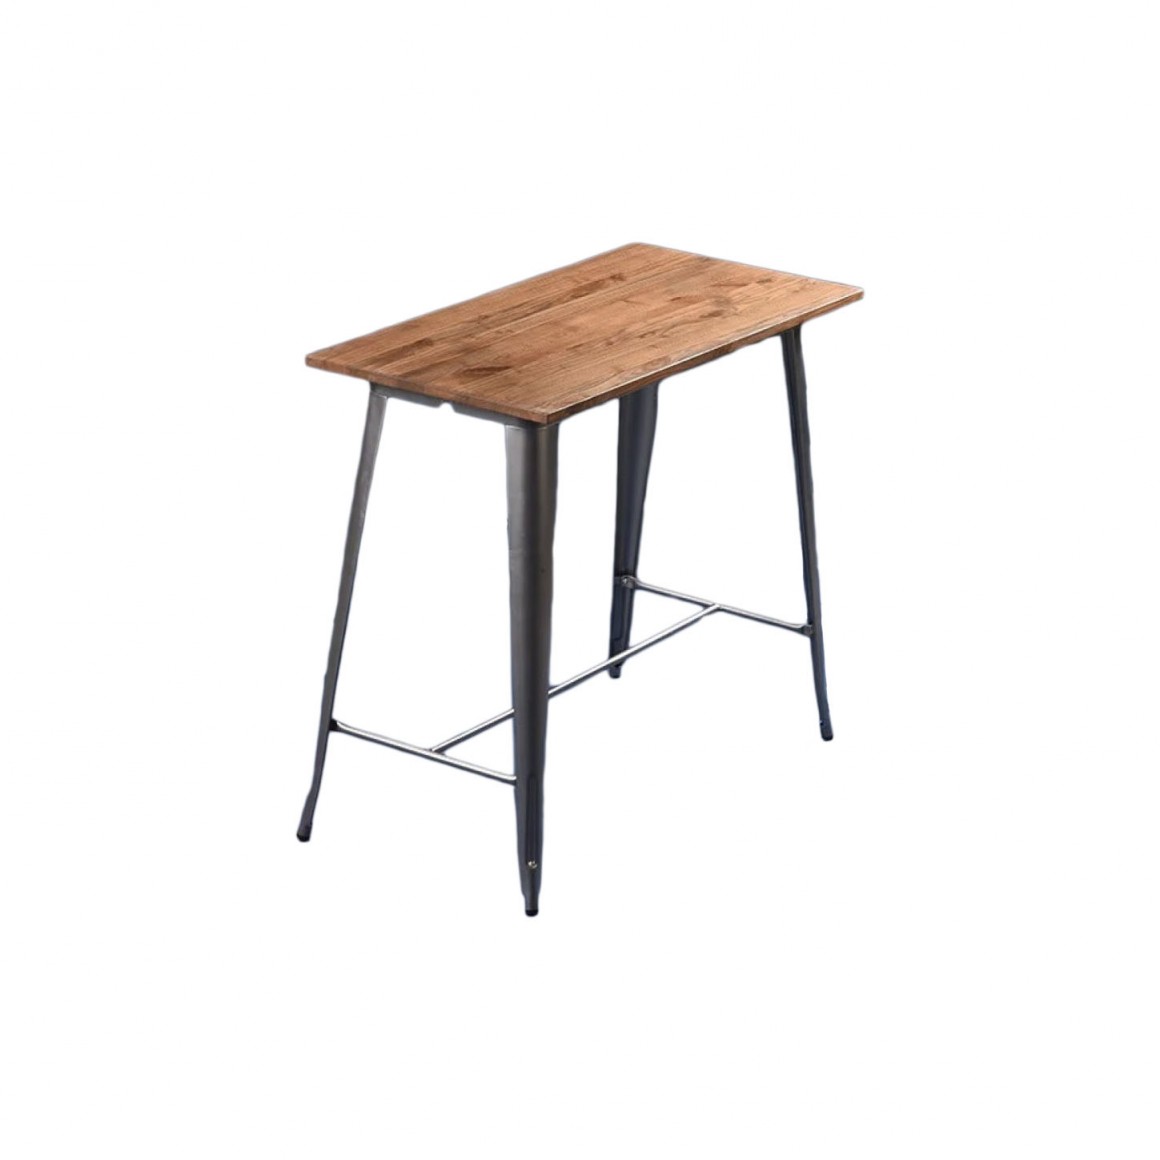 Table: steel leg, elmwood top,silver